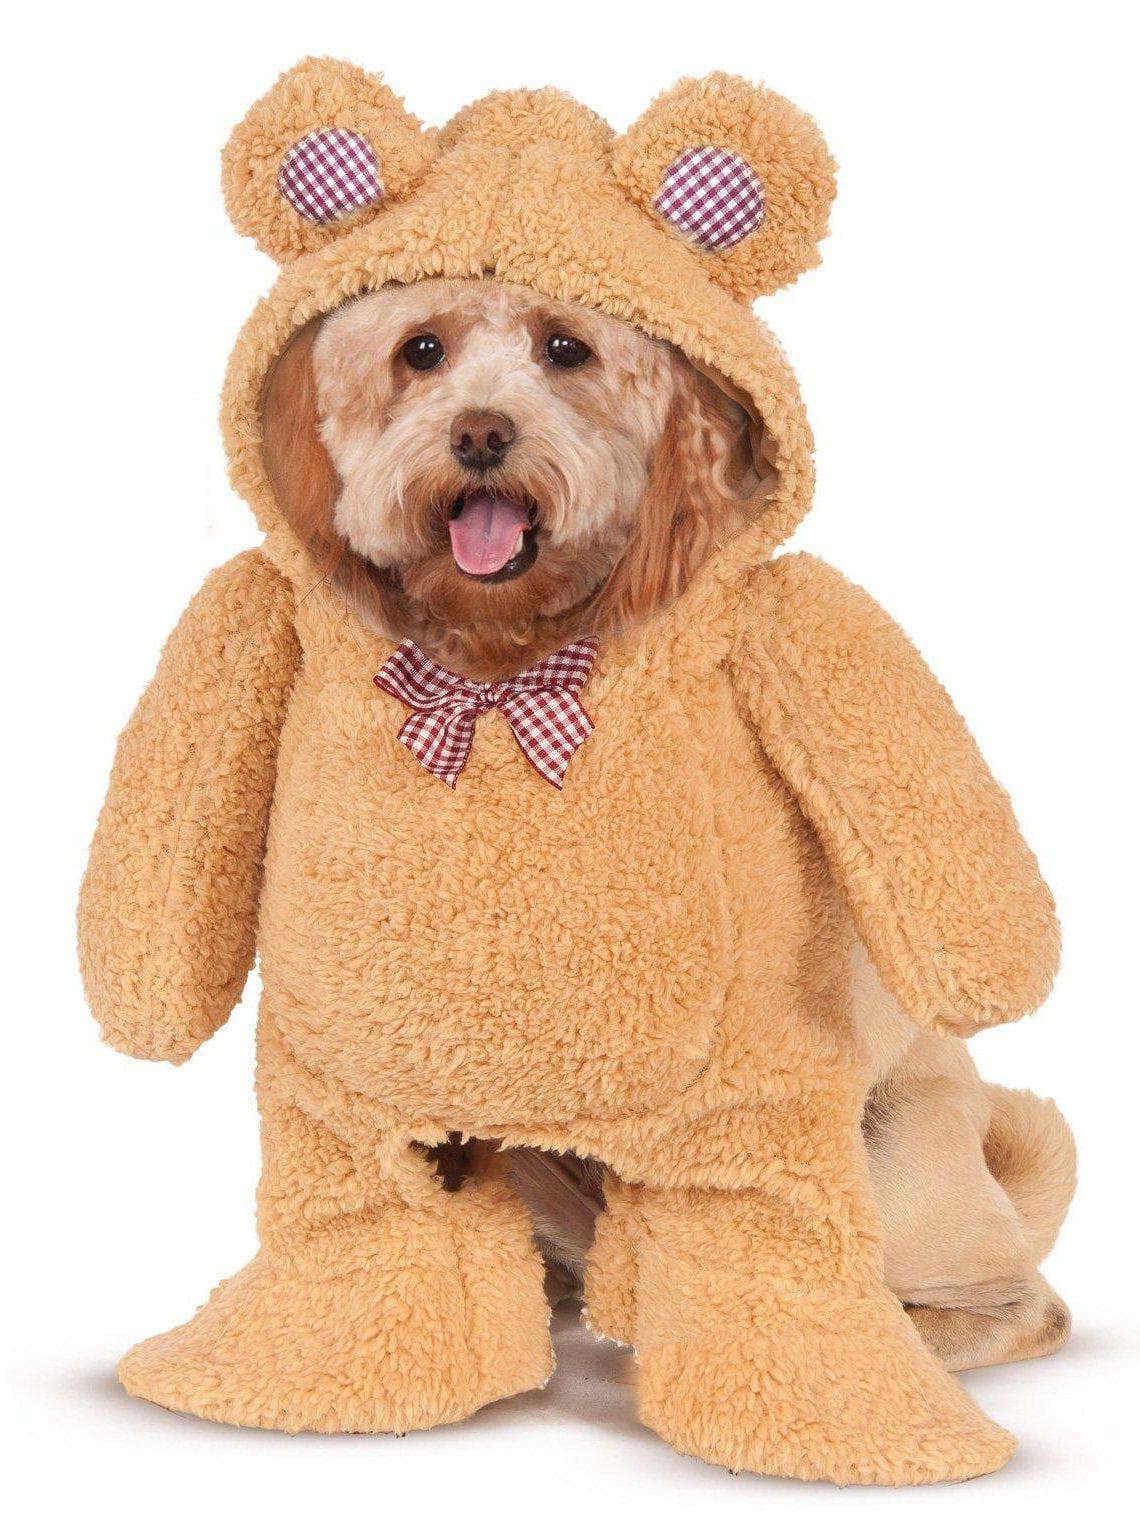 Walking Teddy Bear Pet Costume - costumes.com